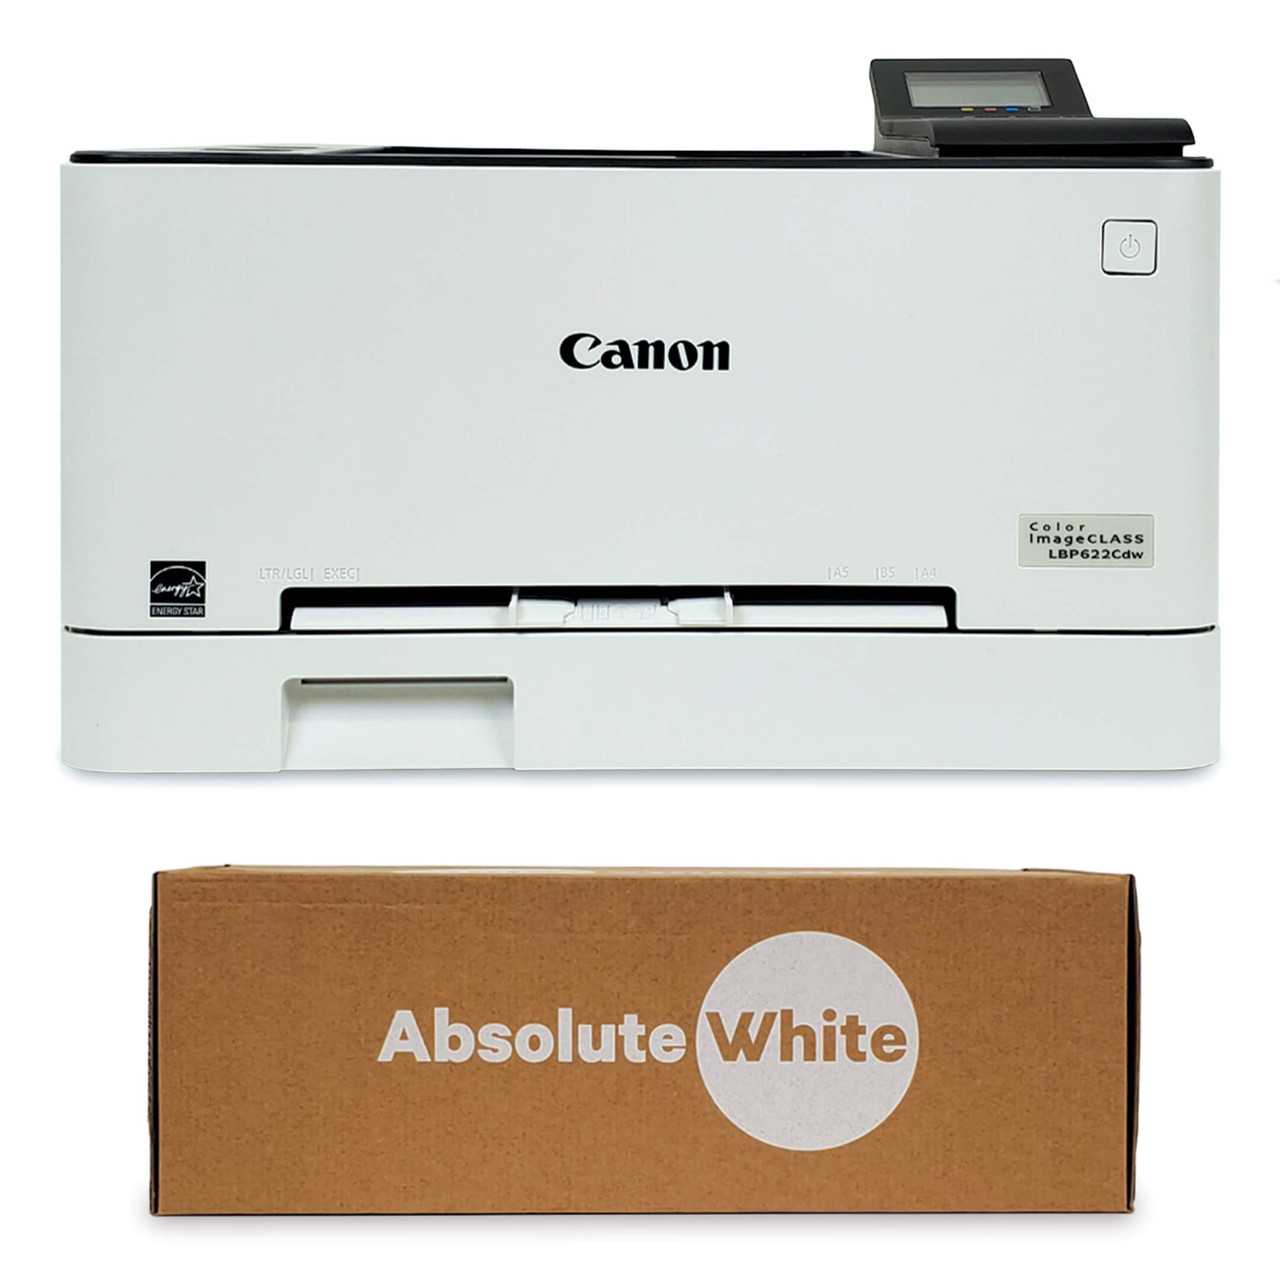 Fácil Influencia Equipar Canon LBP622CDW Color Printer with Absolute White Toner Bundle